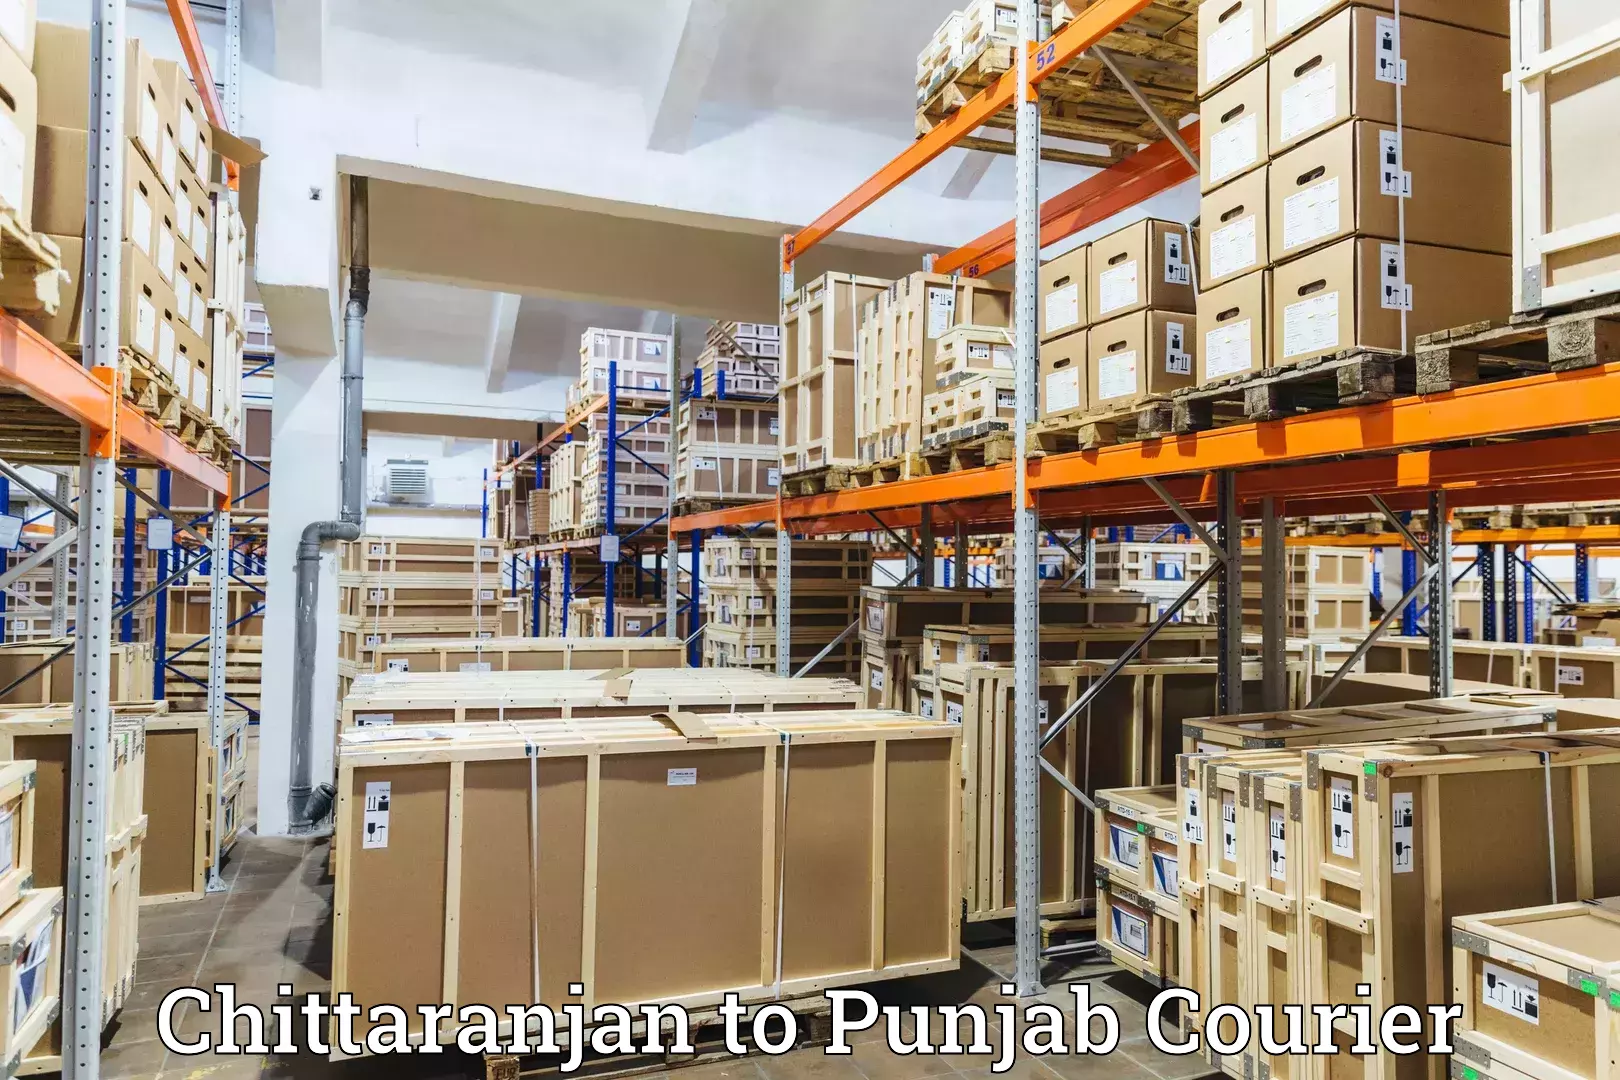 Courier service comparison Chittaranjan to Kapurthala